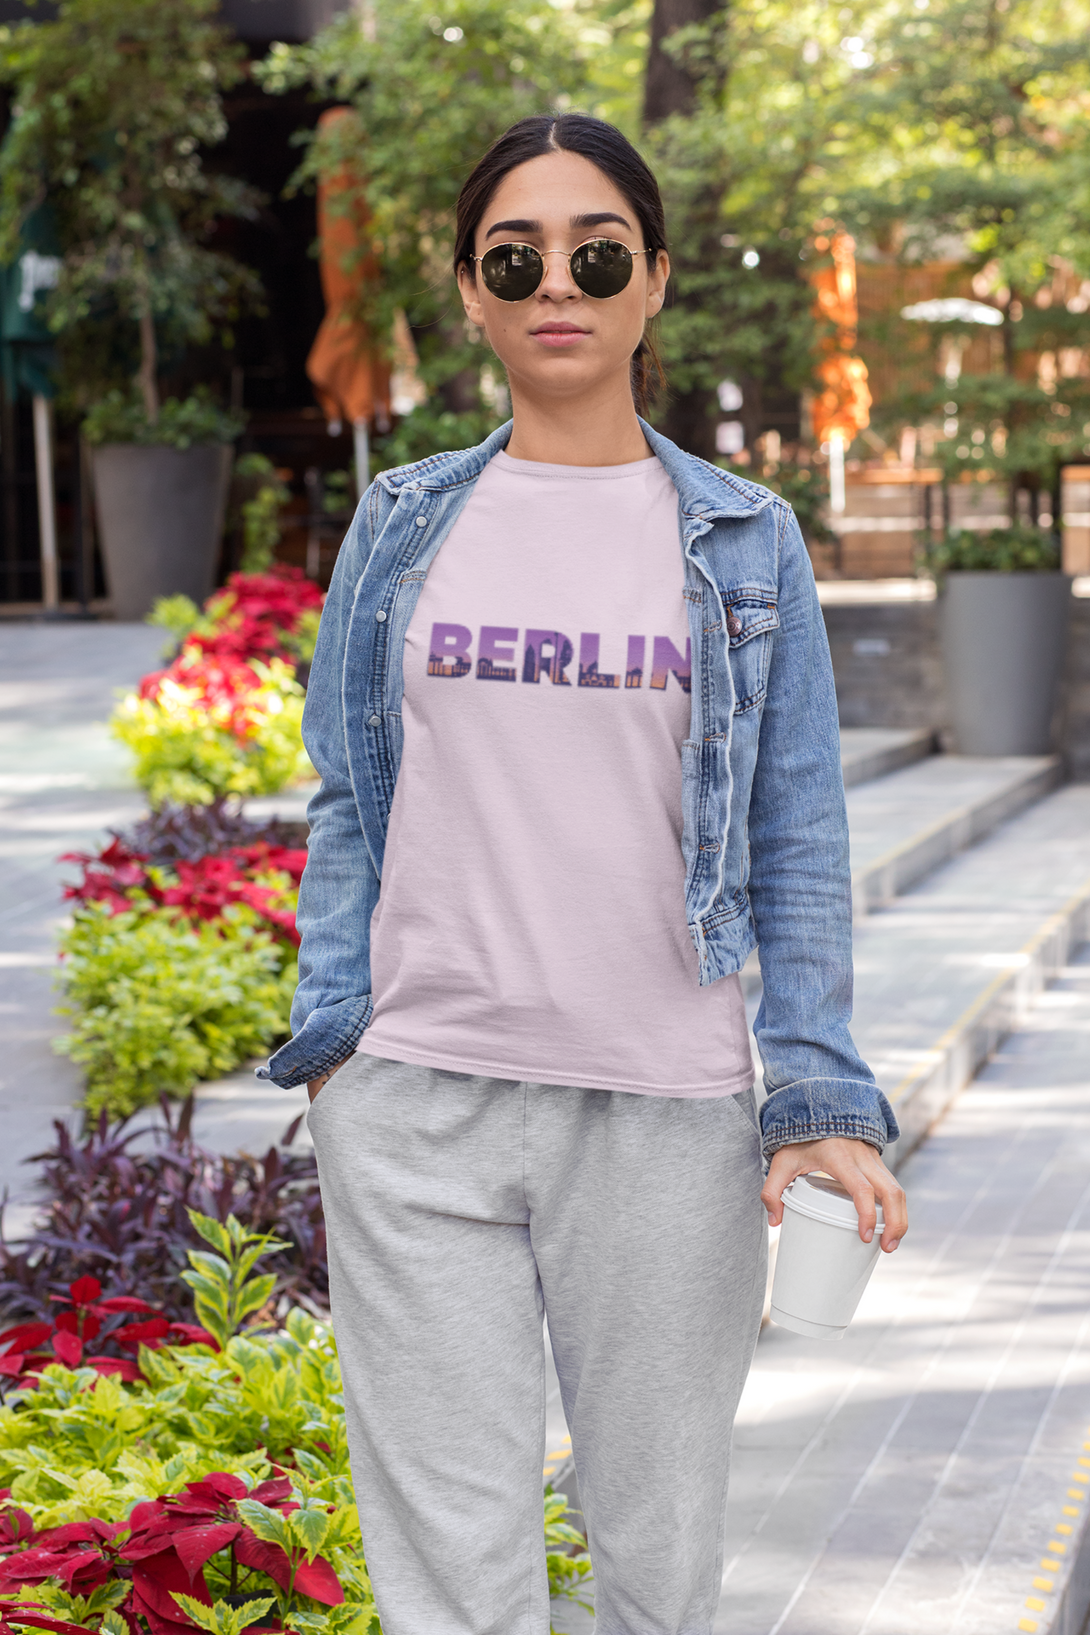 Berlin Skyline Printed T-Shirt For Women - WowWaves - 3